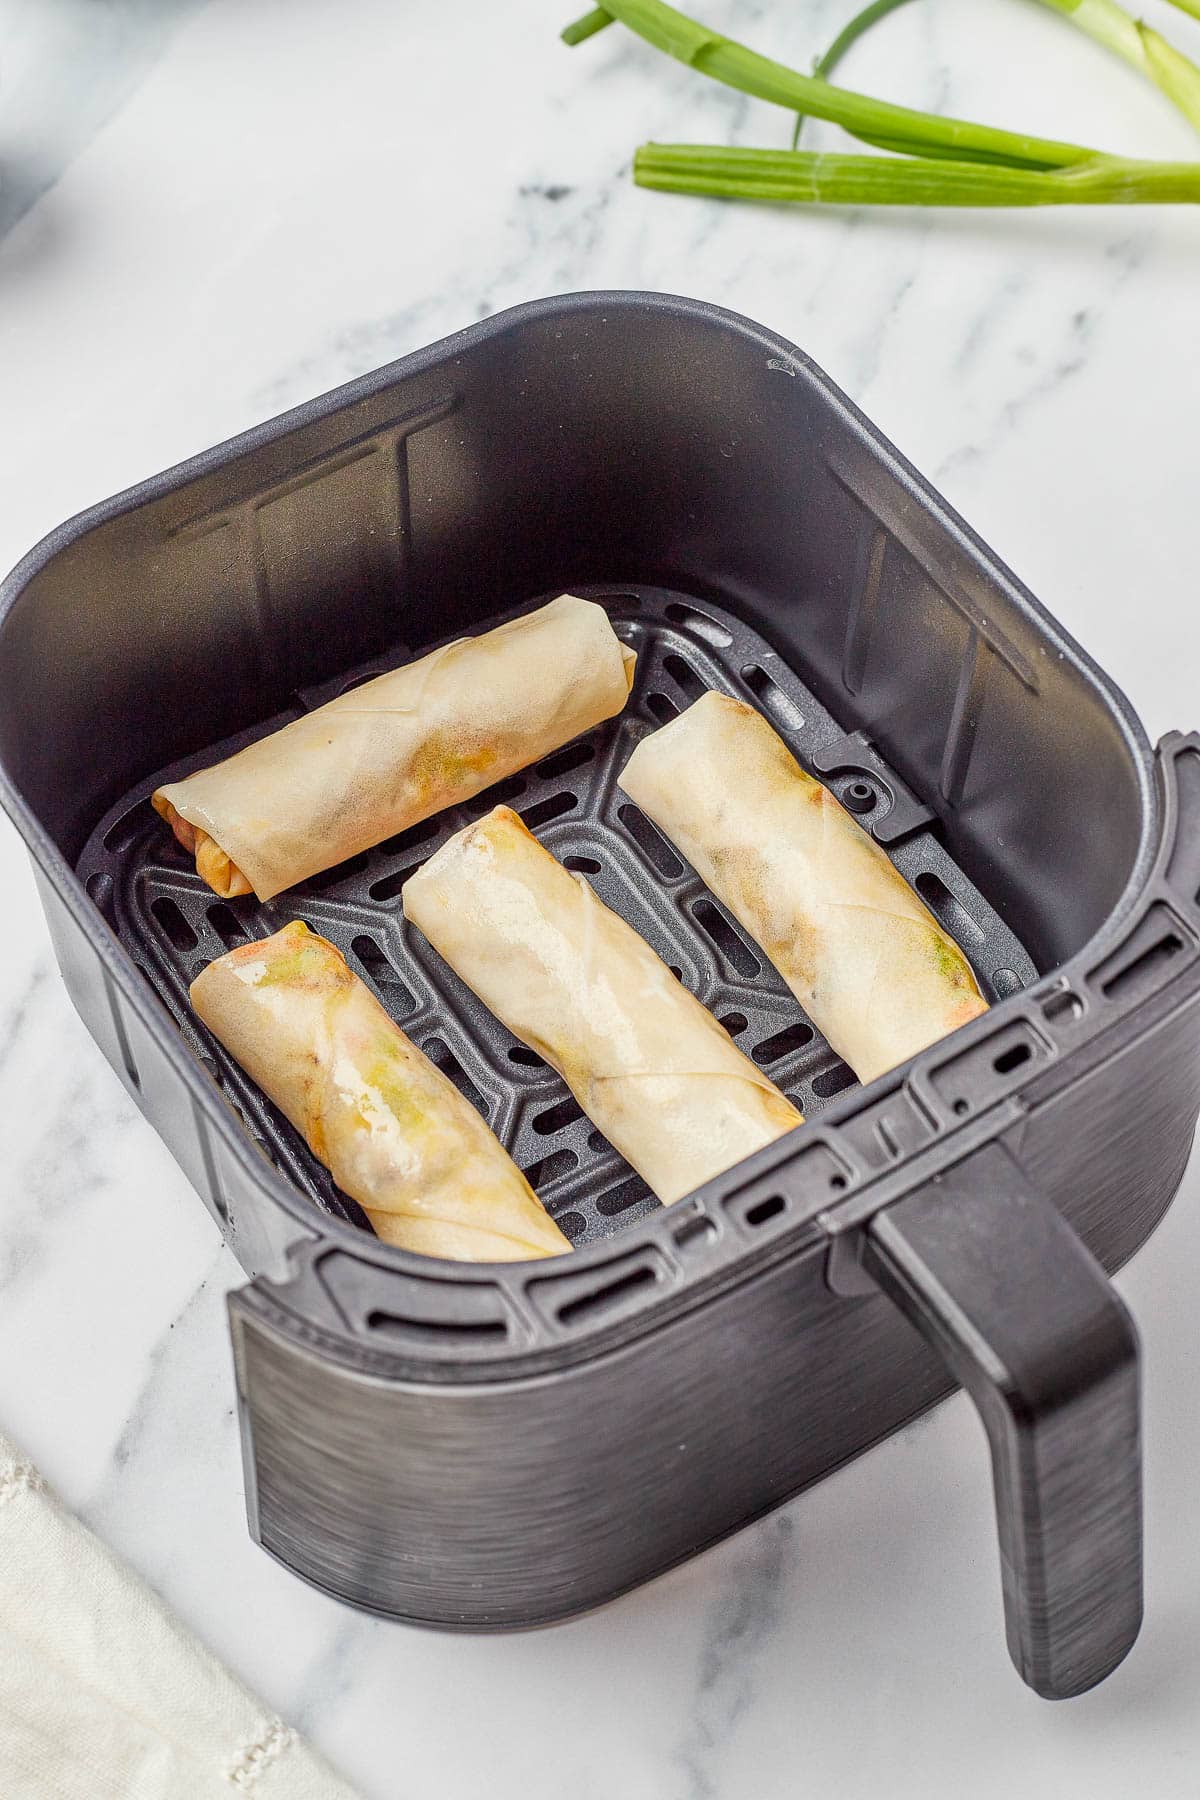 spring rolls in air fryer before cooking